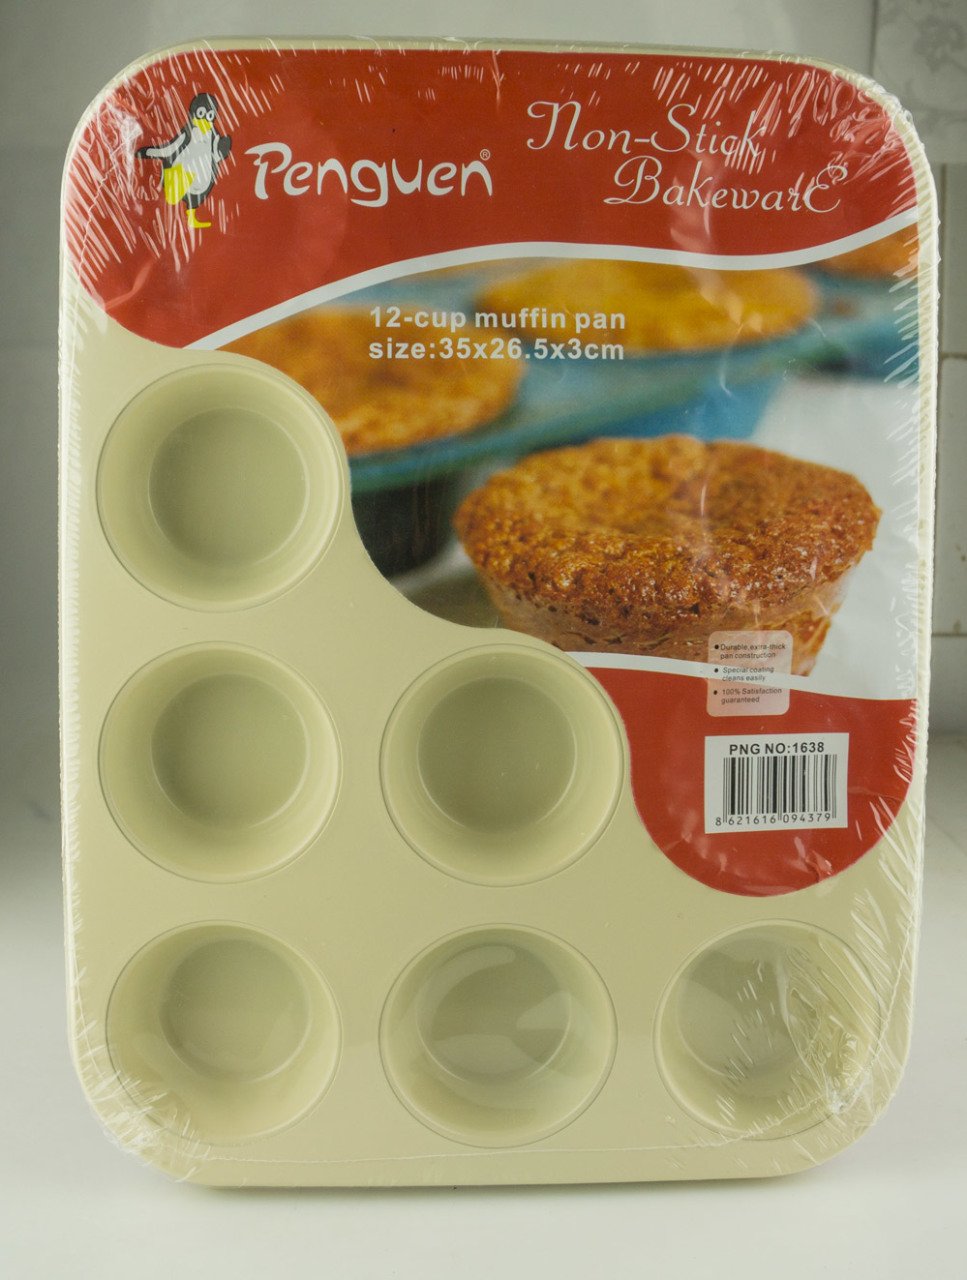 Penguen PNG-1638 Kek kalıbı (krem) muffin kalıbı